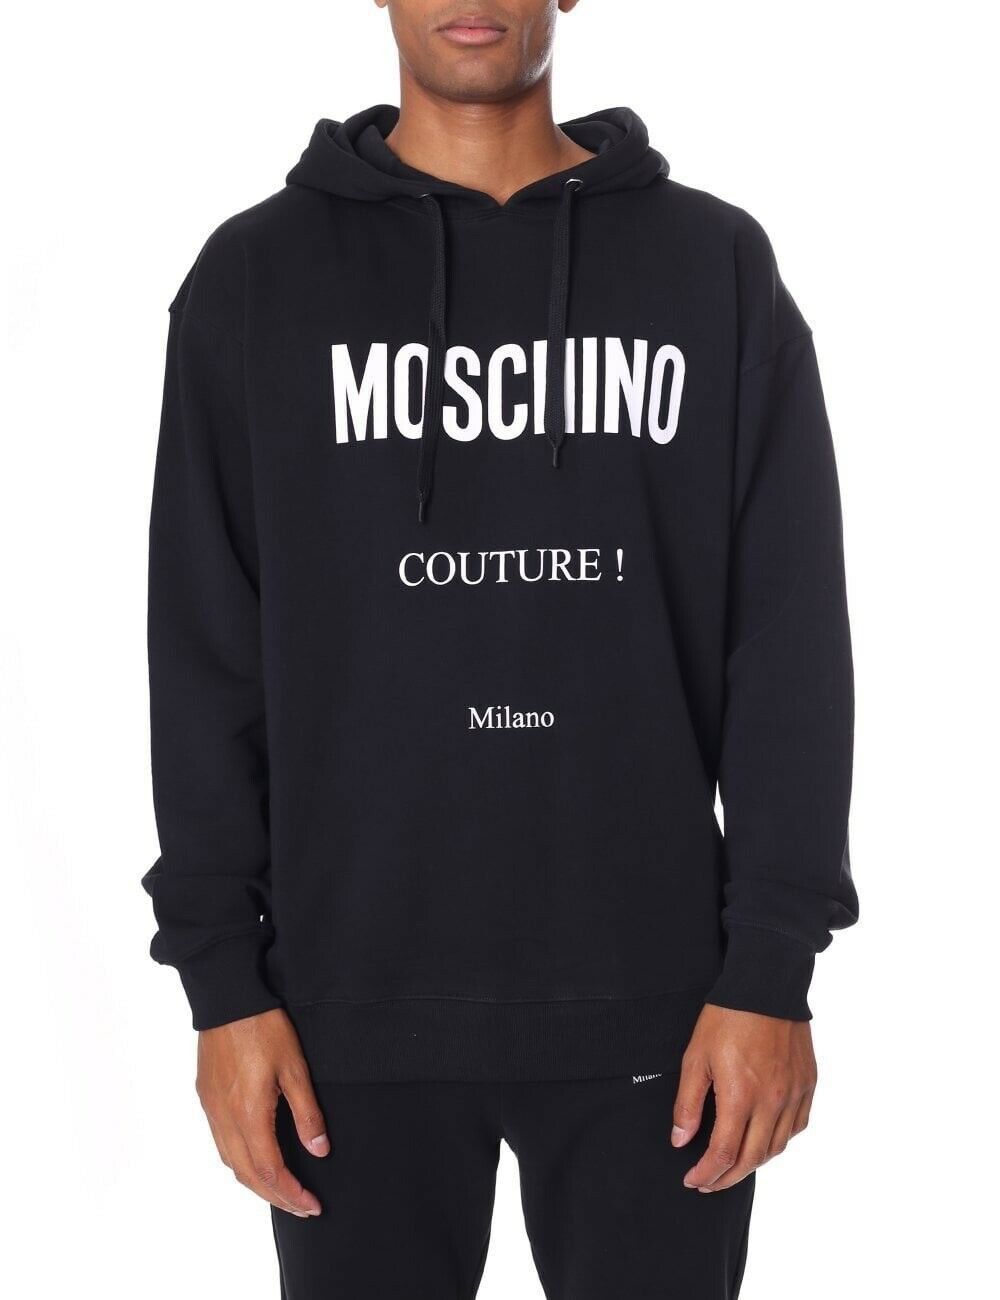 Moschino Moschino Couture Logo Hoodie XL (52) Size US XL / EU 56 / 4 - 1 Preview